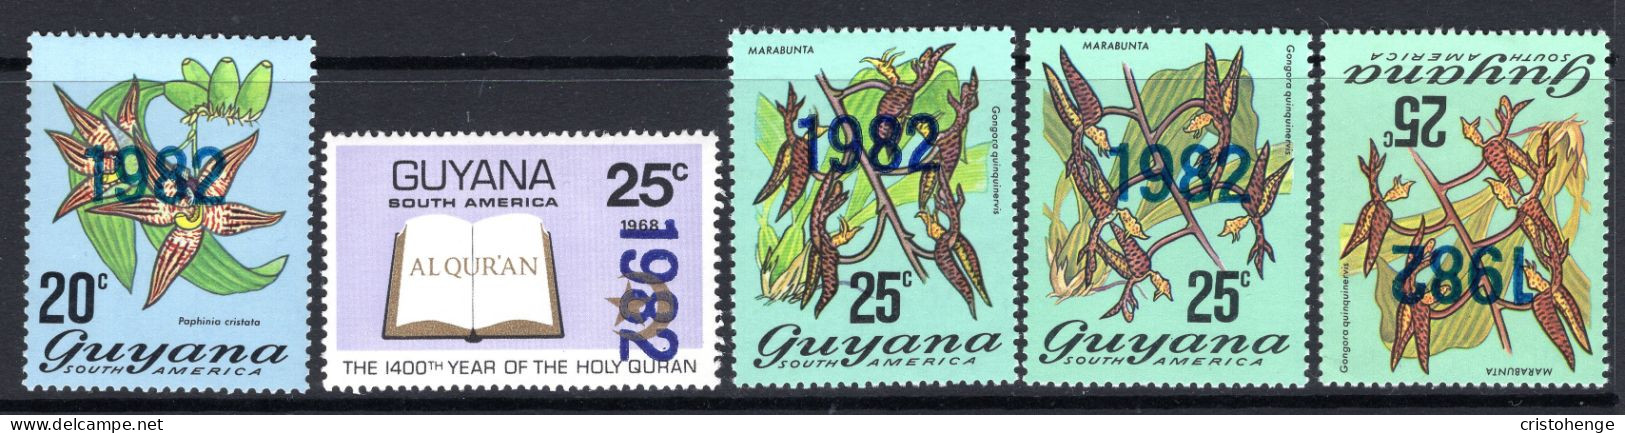 Guyana 1982 Date Overprint Set HM (SG 887-889ab) - Guyana (1966-...)